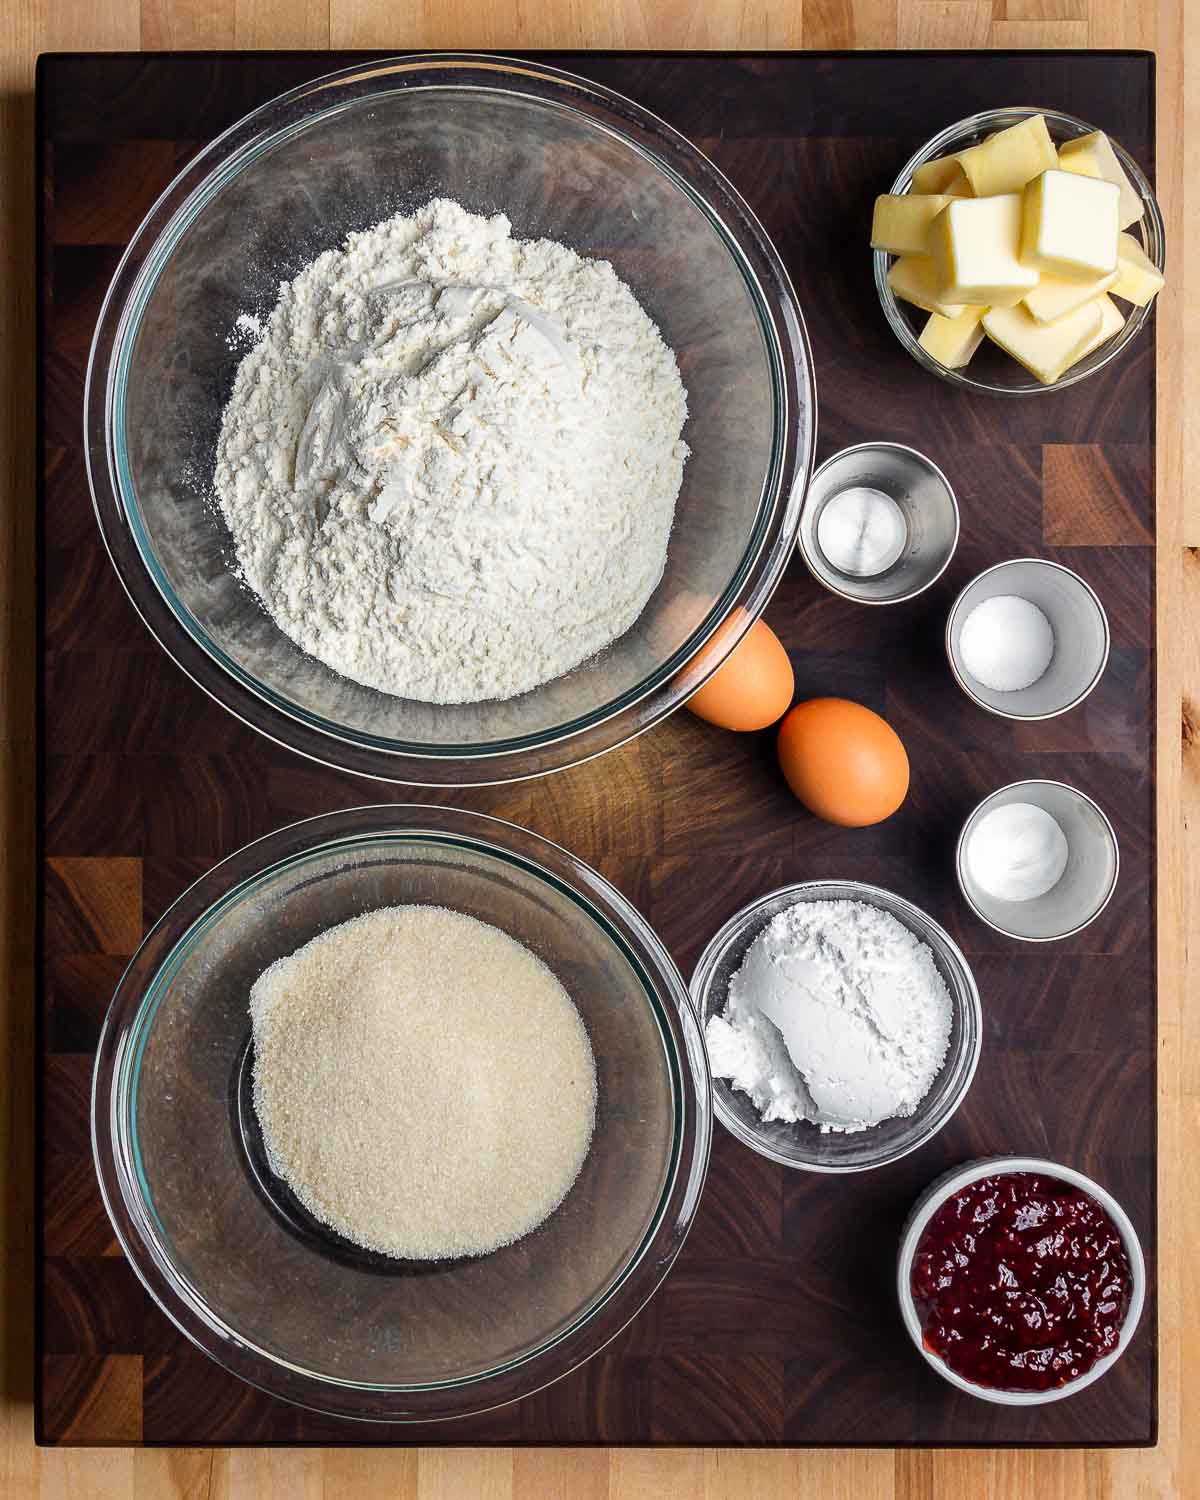 Ingredients shown: flour, butter, almond extract, salt, eggs, baking powder, sugar, powdered sugar, and raspberry jam.